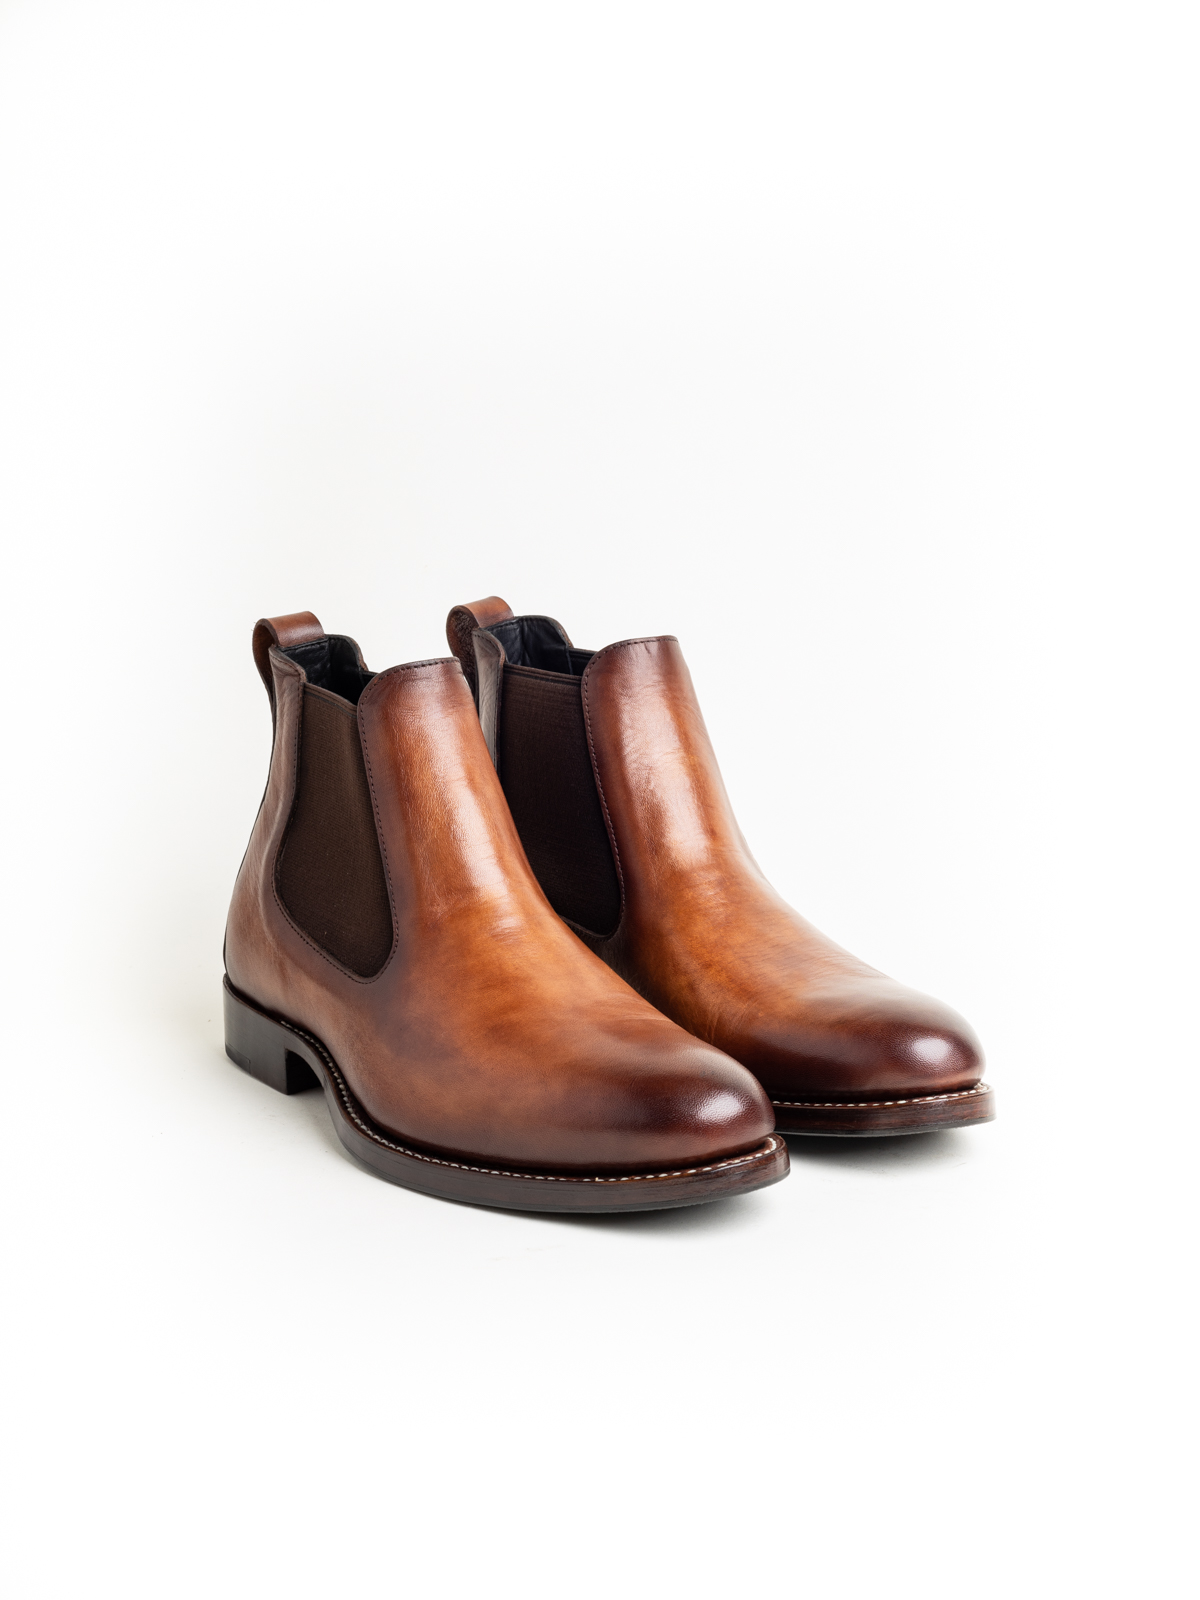 CHELSEA Boot - Perera Shoe Maker